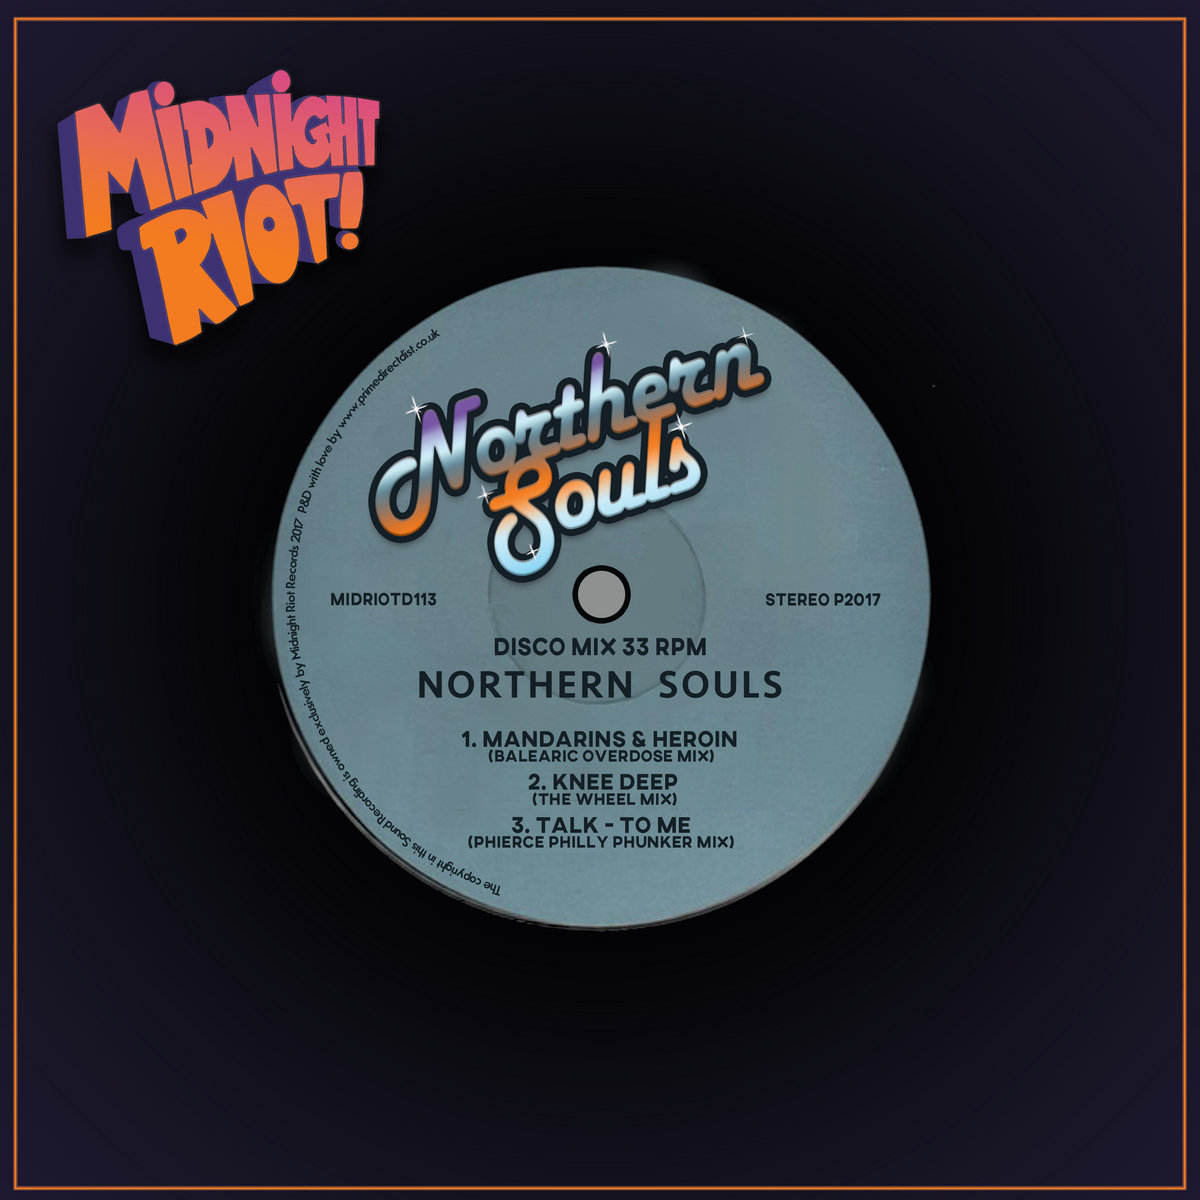 Funkadelic - Maggot Brain 1970 FLAC MP3 download lossless